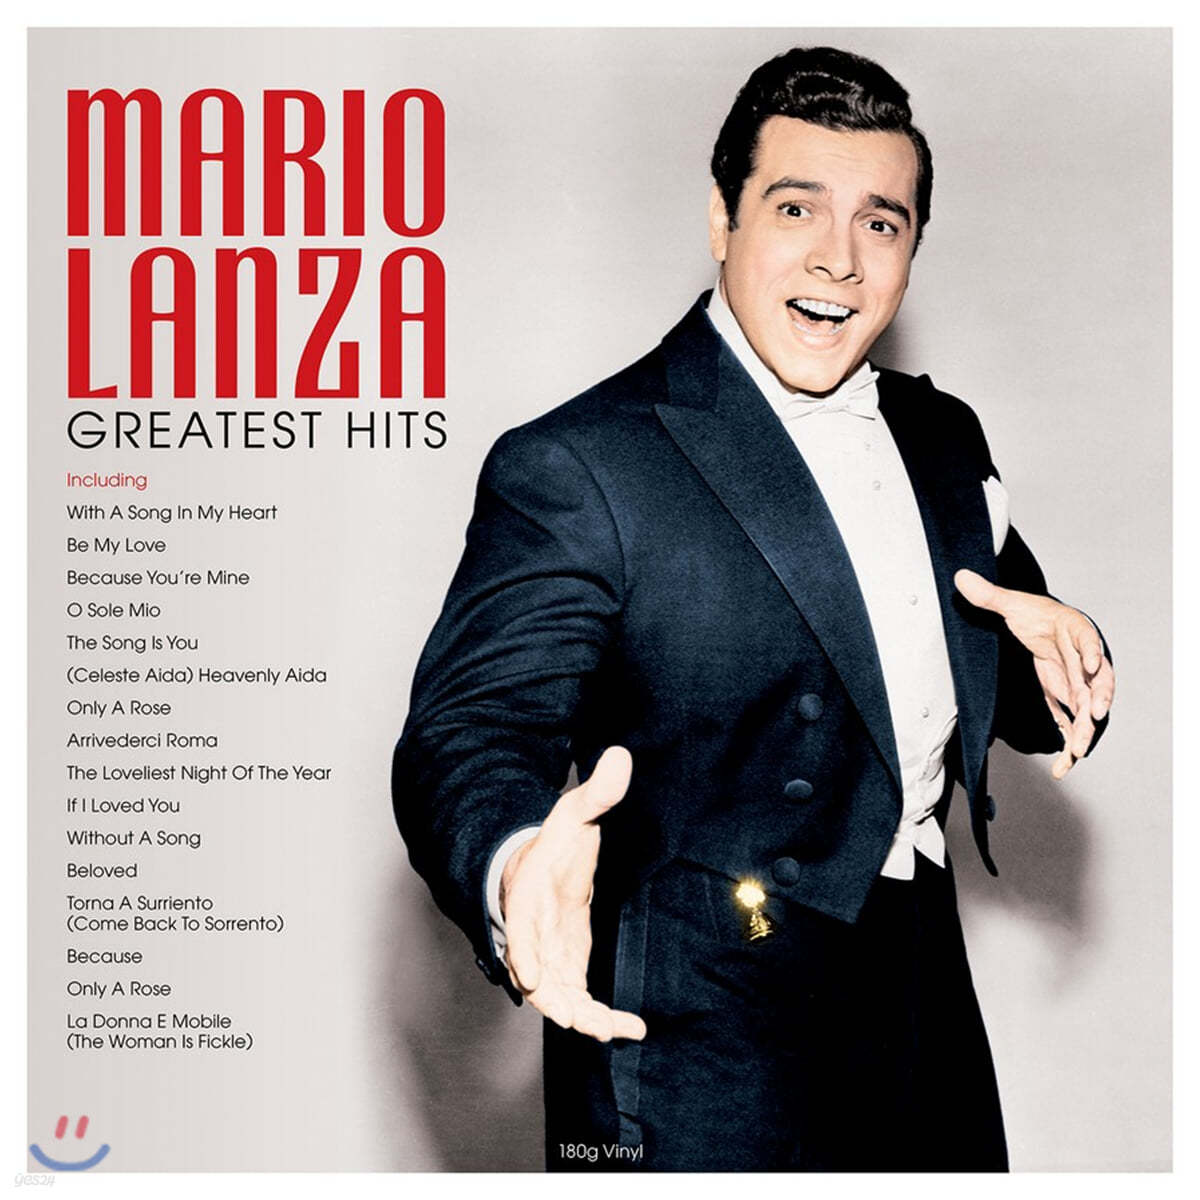 Mario Lanza 테너 마리오 란자 베스트 앨범 (Greatest Hits) [LP]